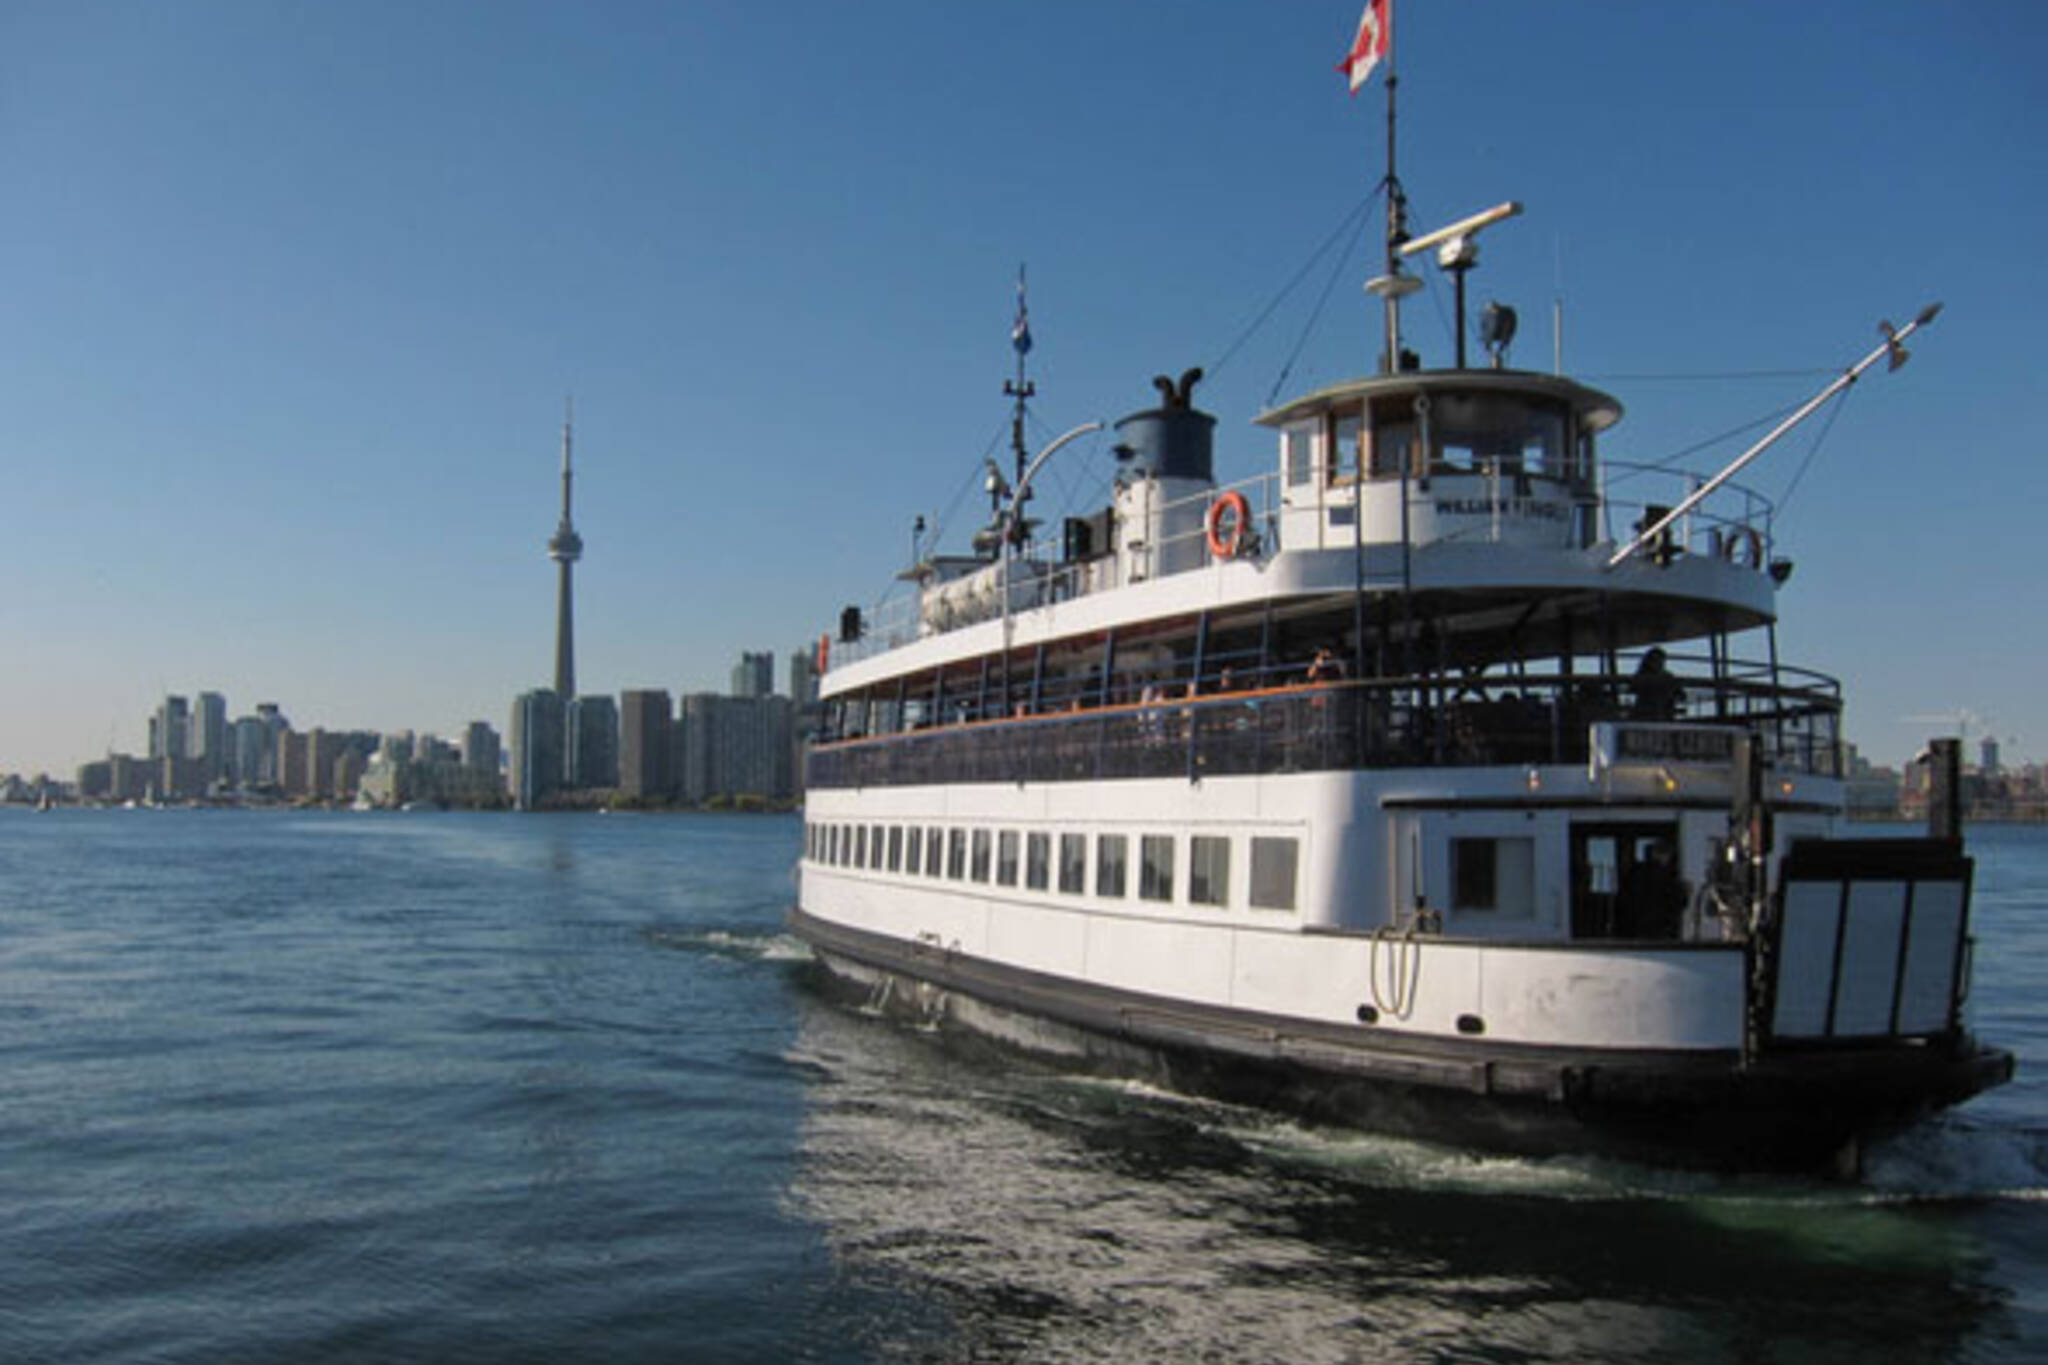 The Toronto Island Ferry